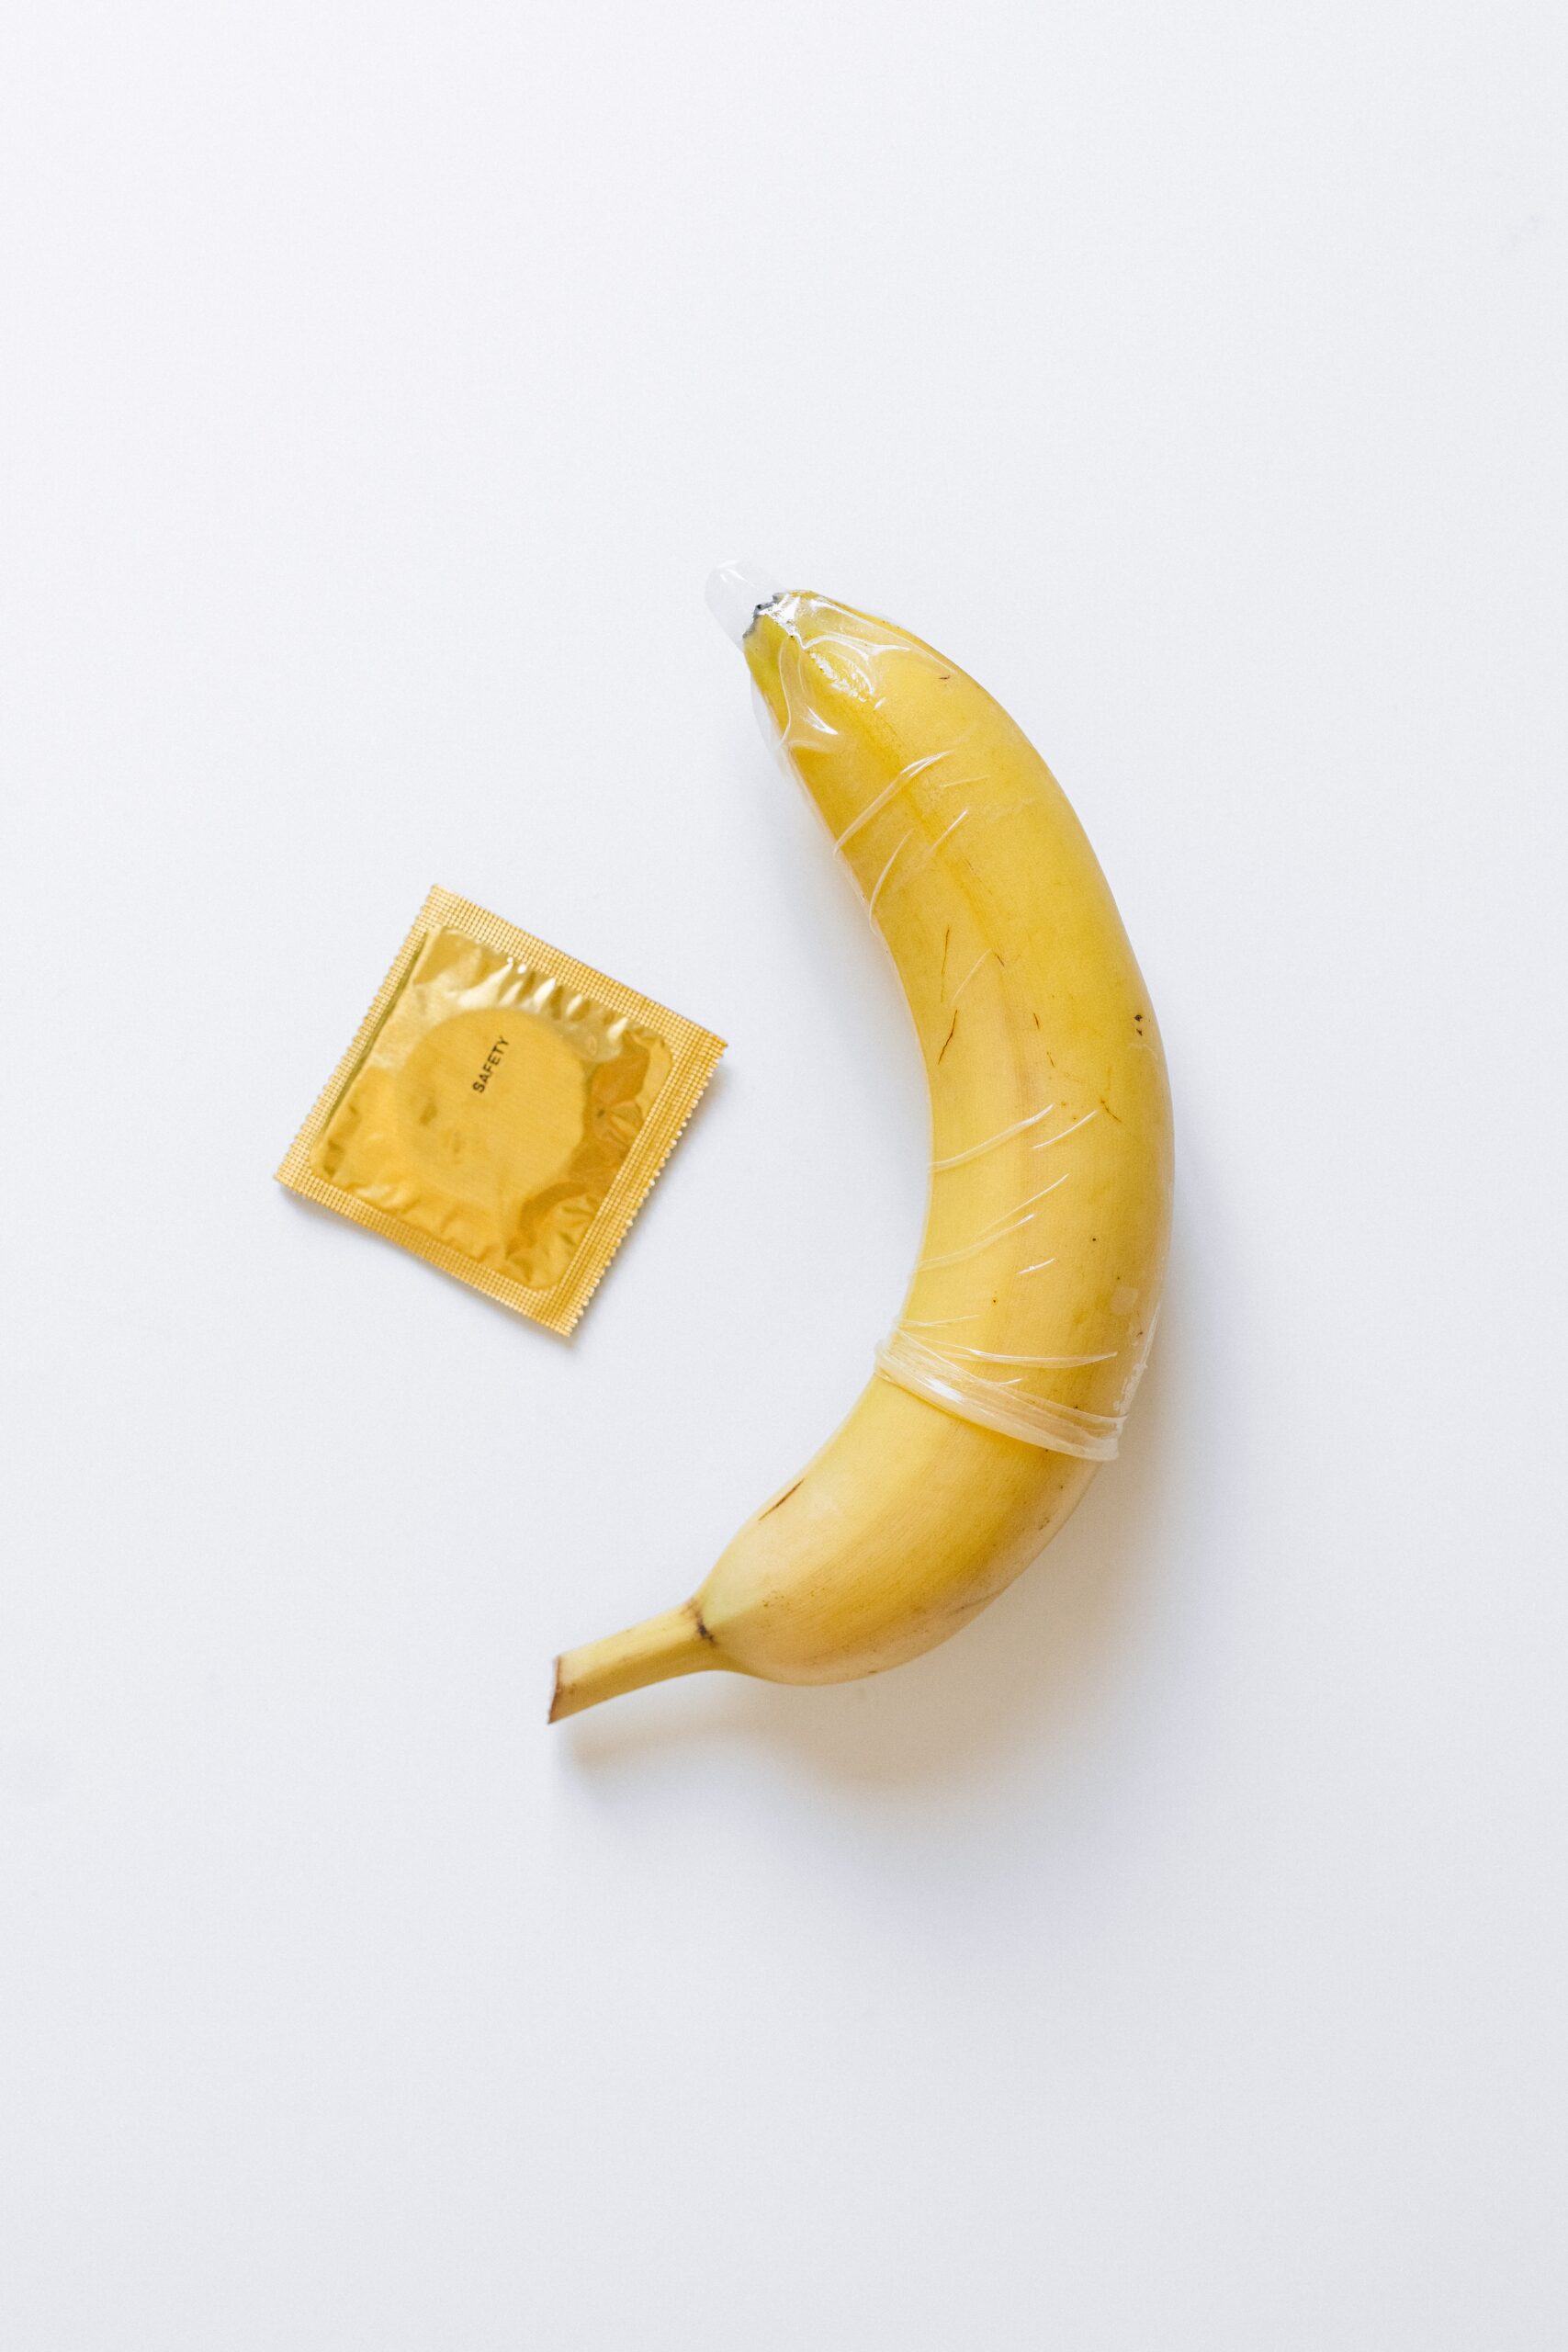 Condom on Yellow Banana Date: 24 August 2020